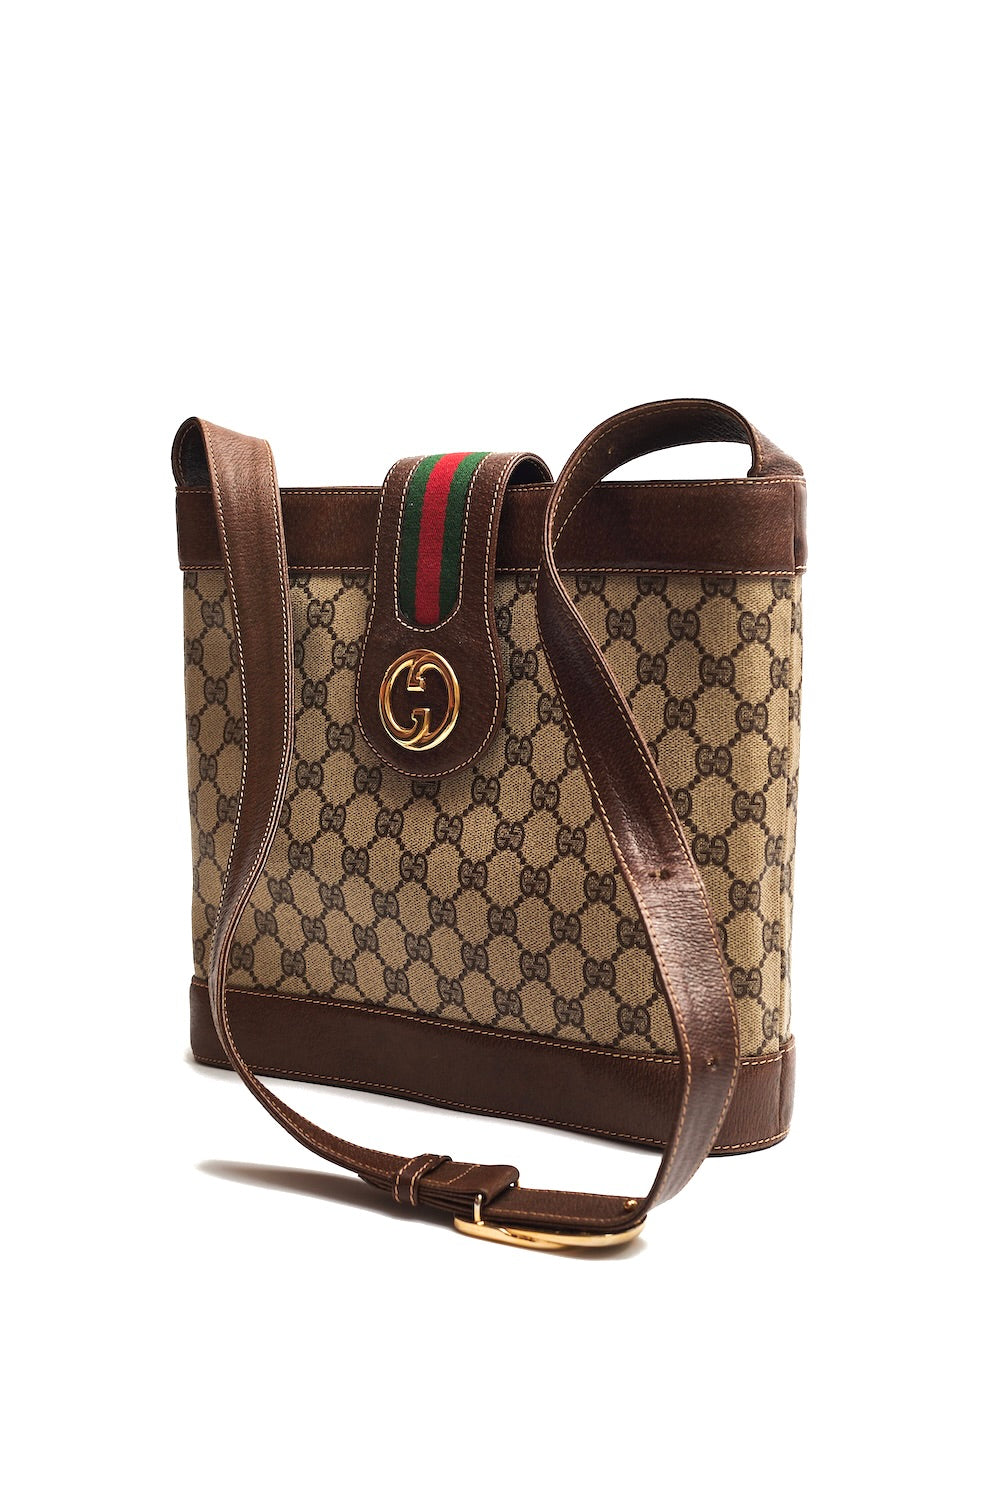 Gucci <br> 1970's leather & canvas monogram logo web shoulder bag